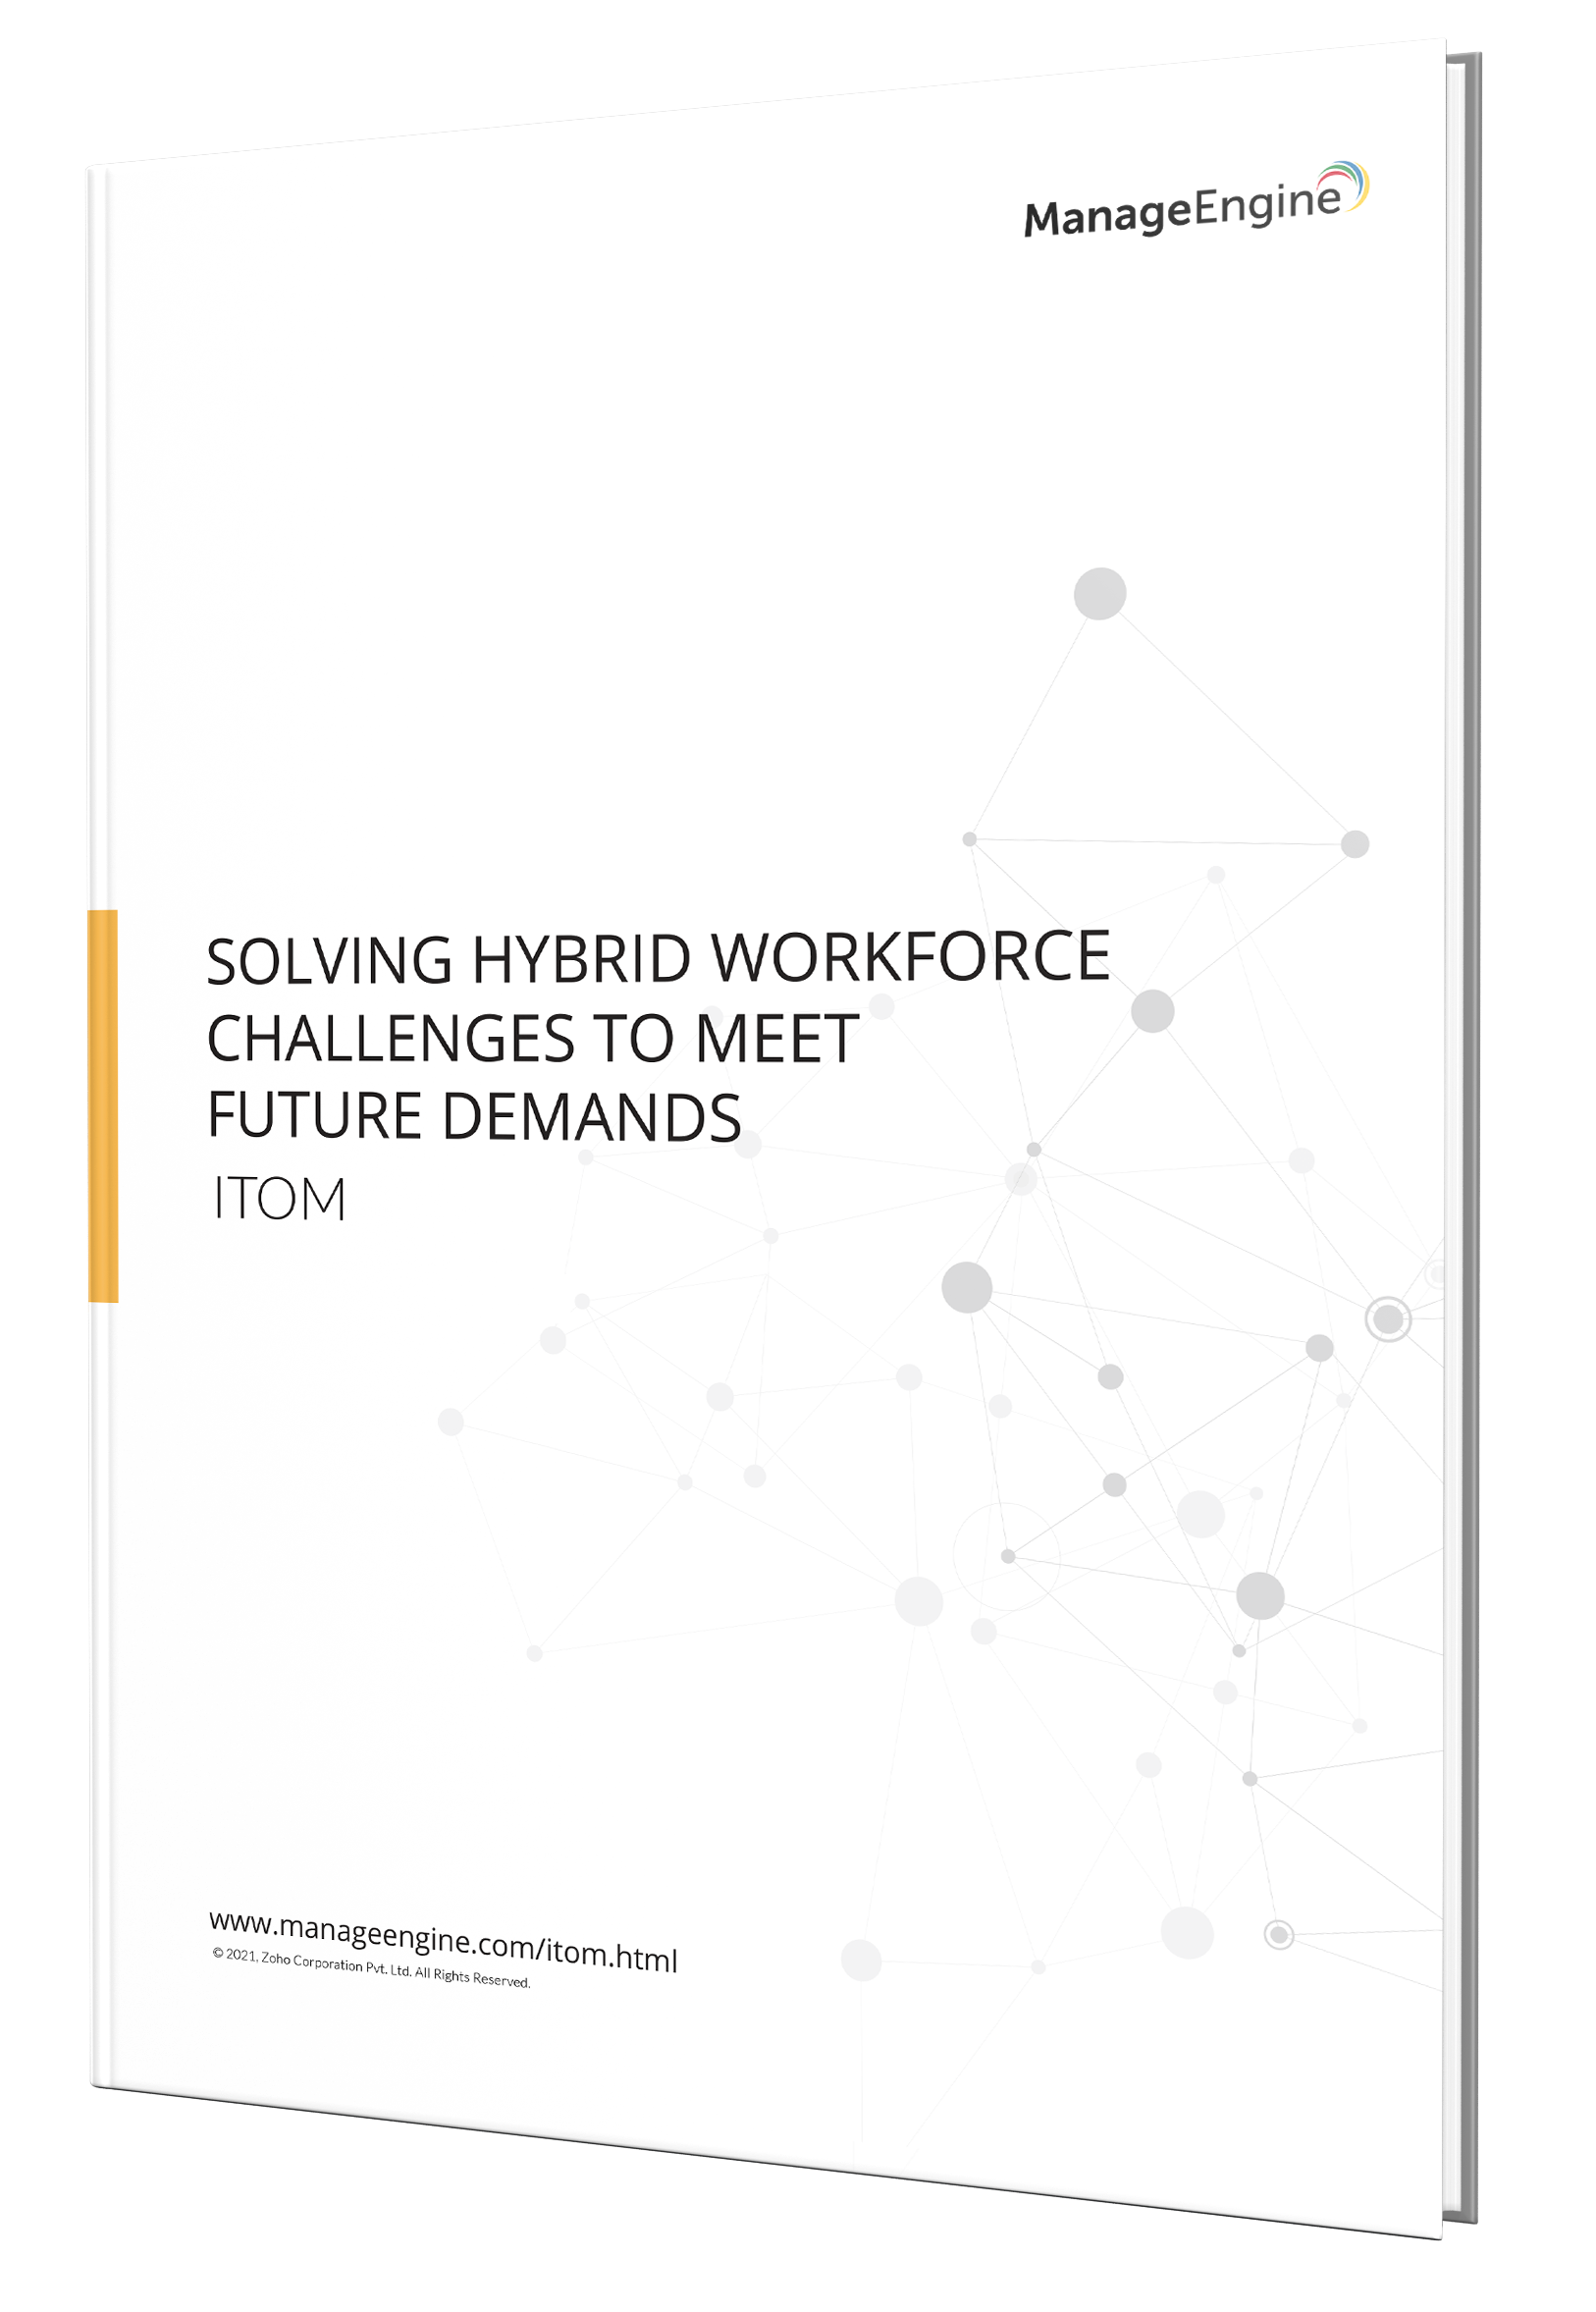 Preparing your IT for hybrid workforce